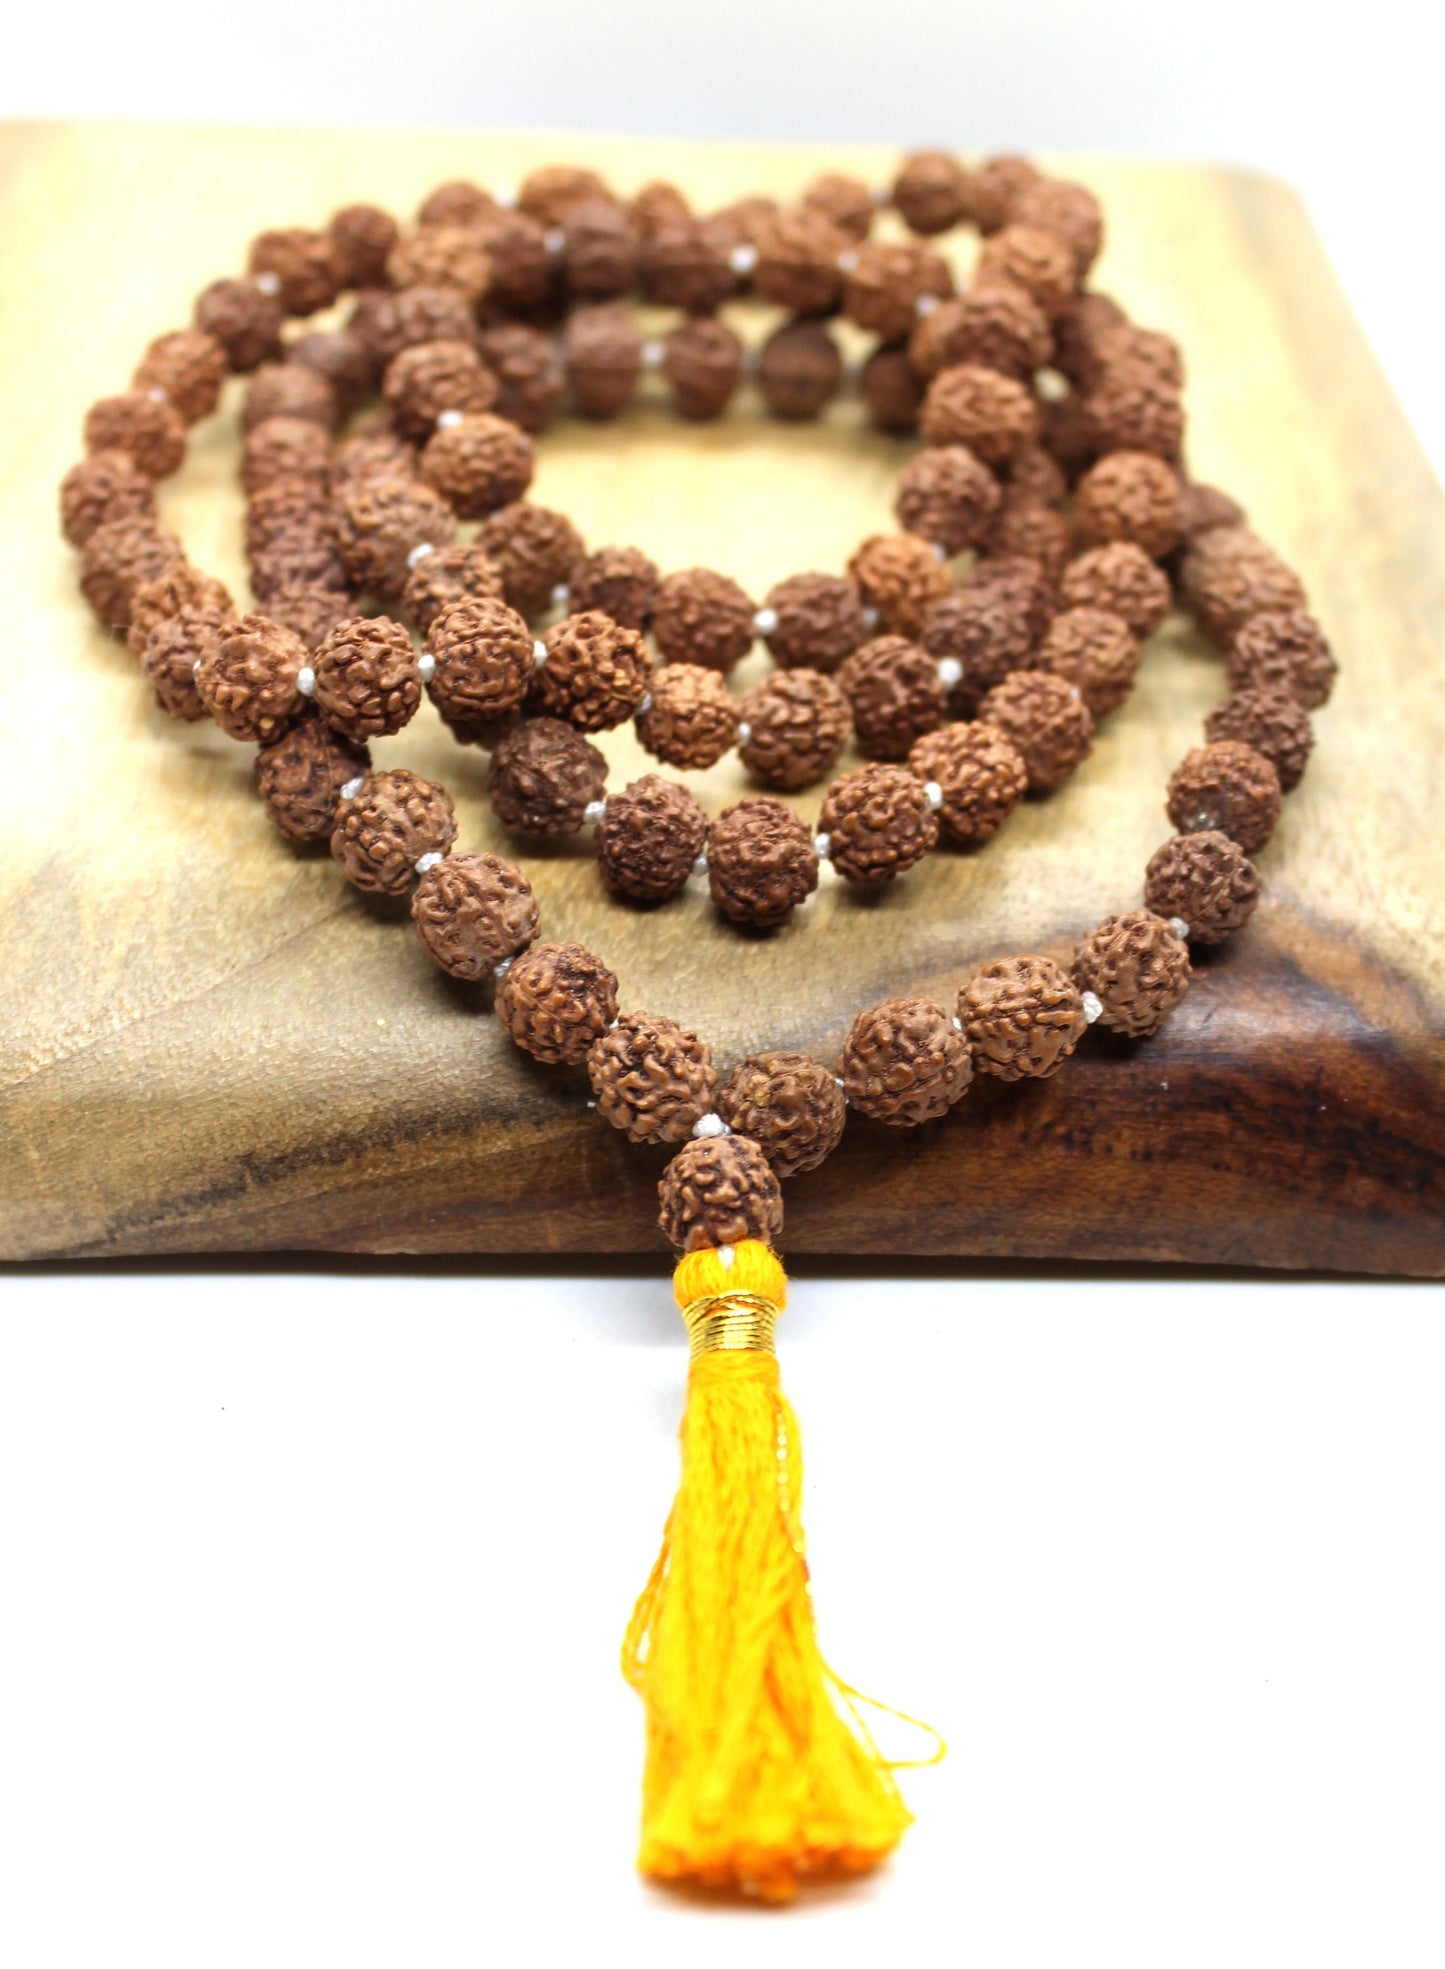 Rudraksha mala 8 mm knotted 108 + 1 prayer beads, Long Orange Tassel necklace, mens mala india, yoga meditation buddhist tibetan prayer mala